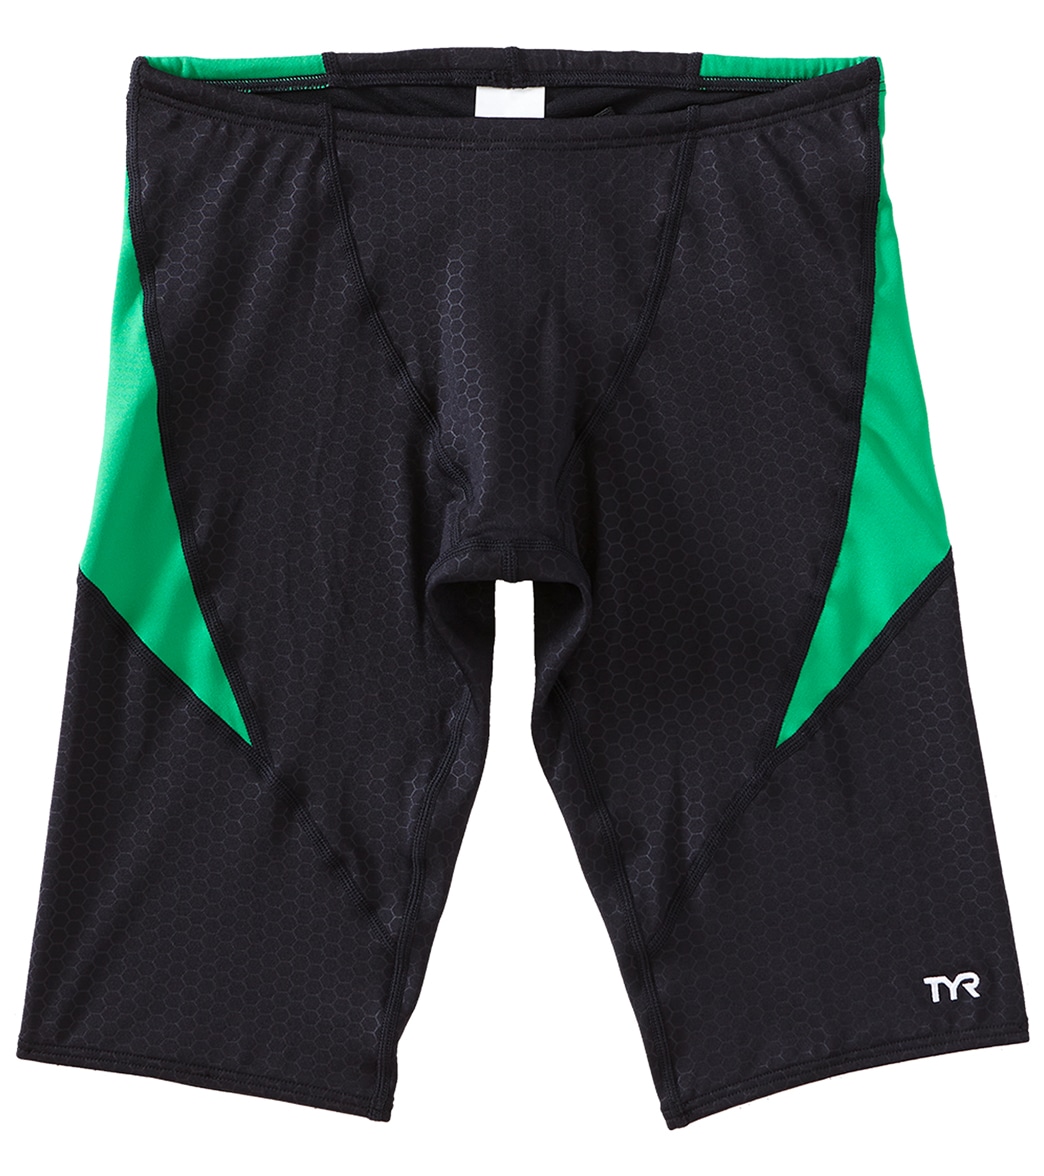 TYR Boys' Hexa Curve Splice Jammer Swimsuit - Black/Green 22 - Swimoutlet.com